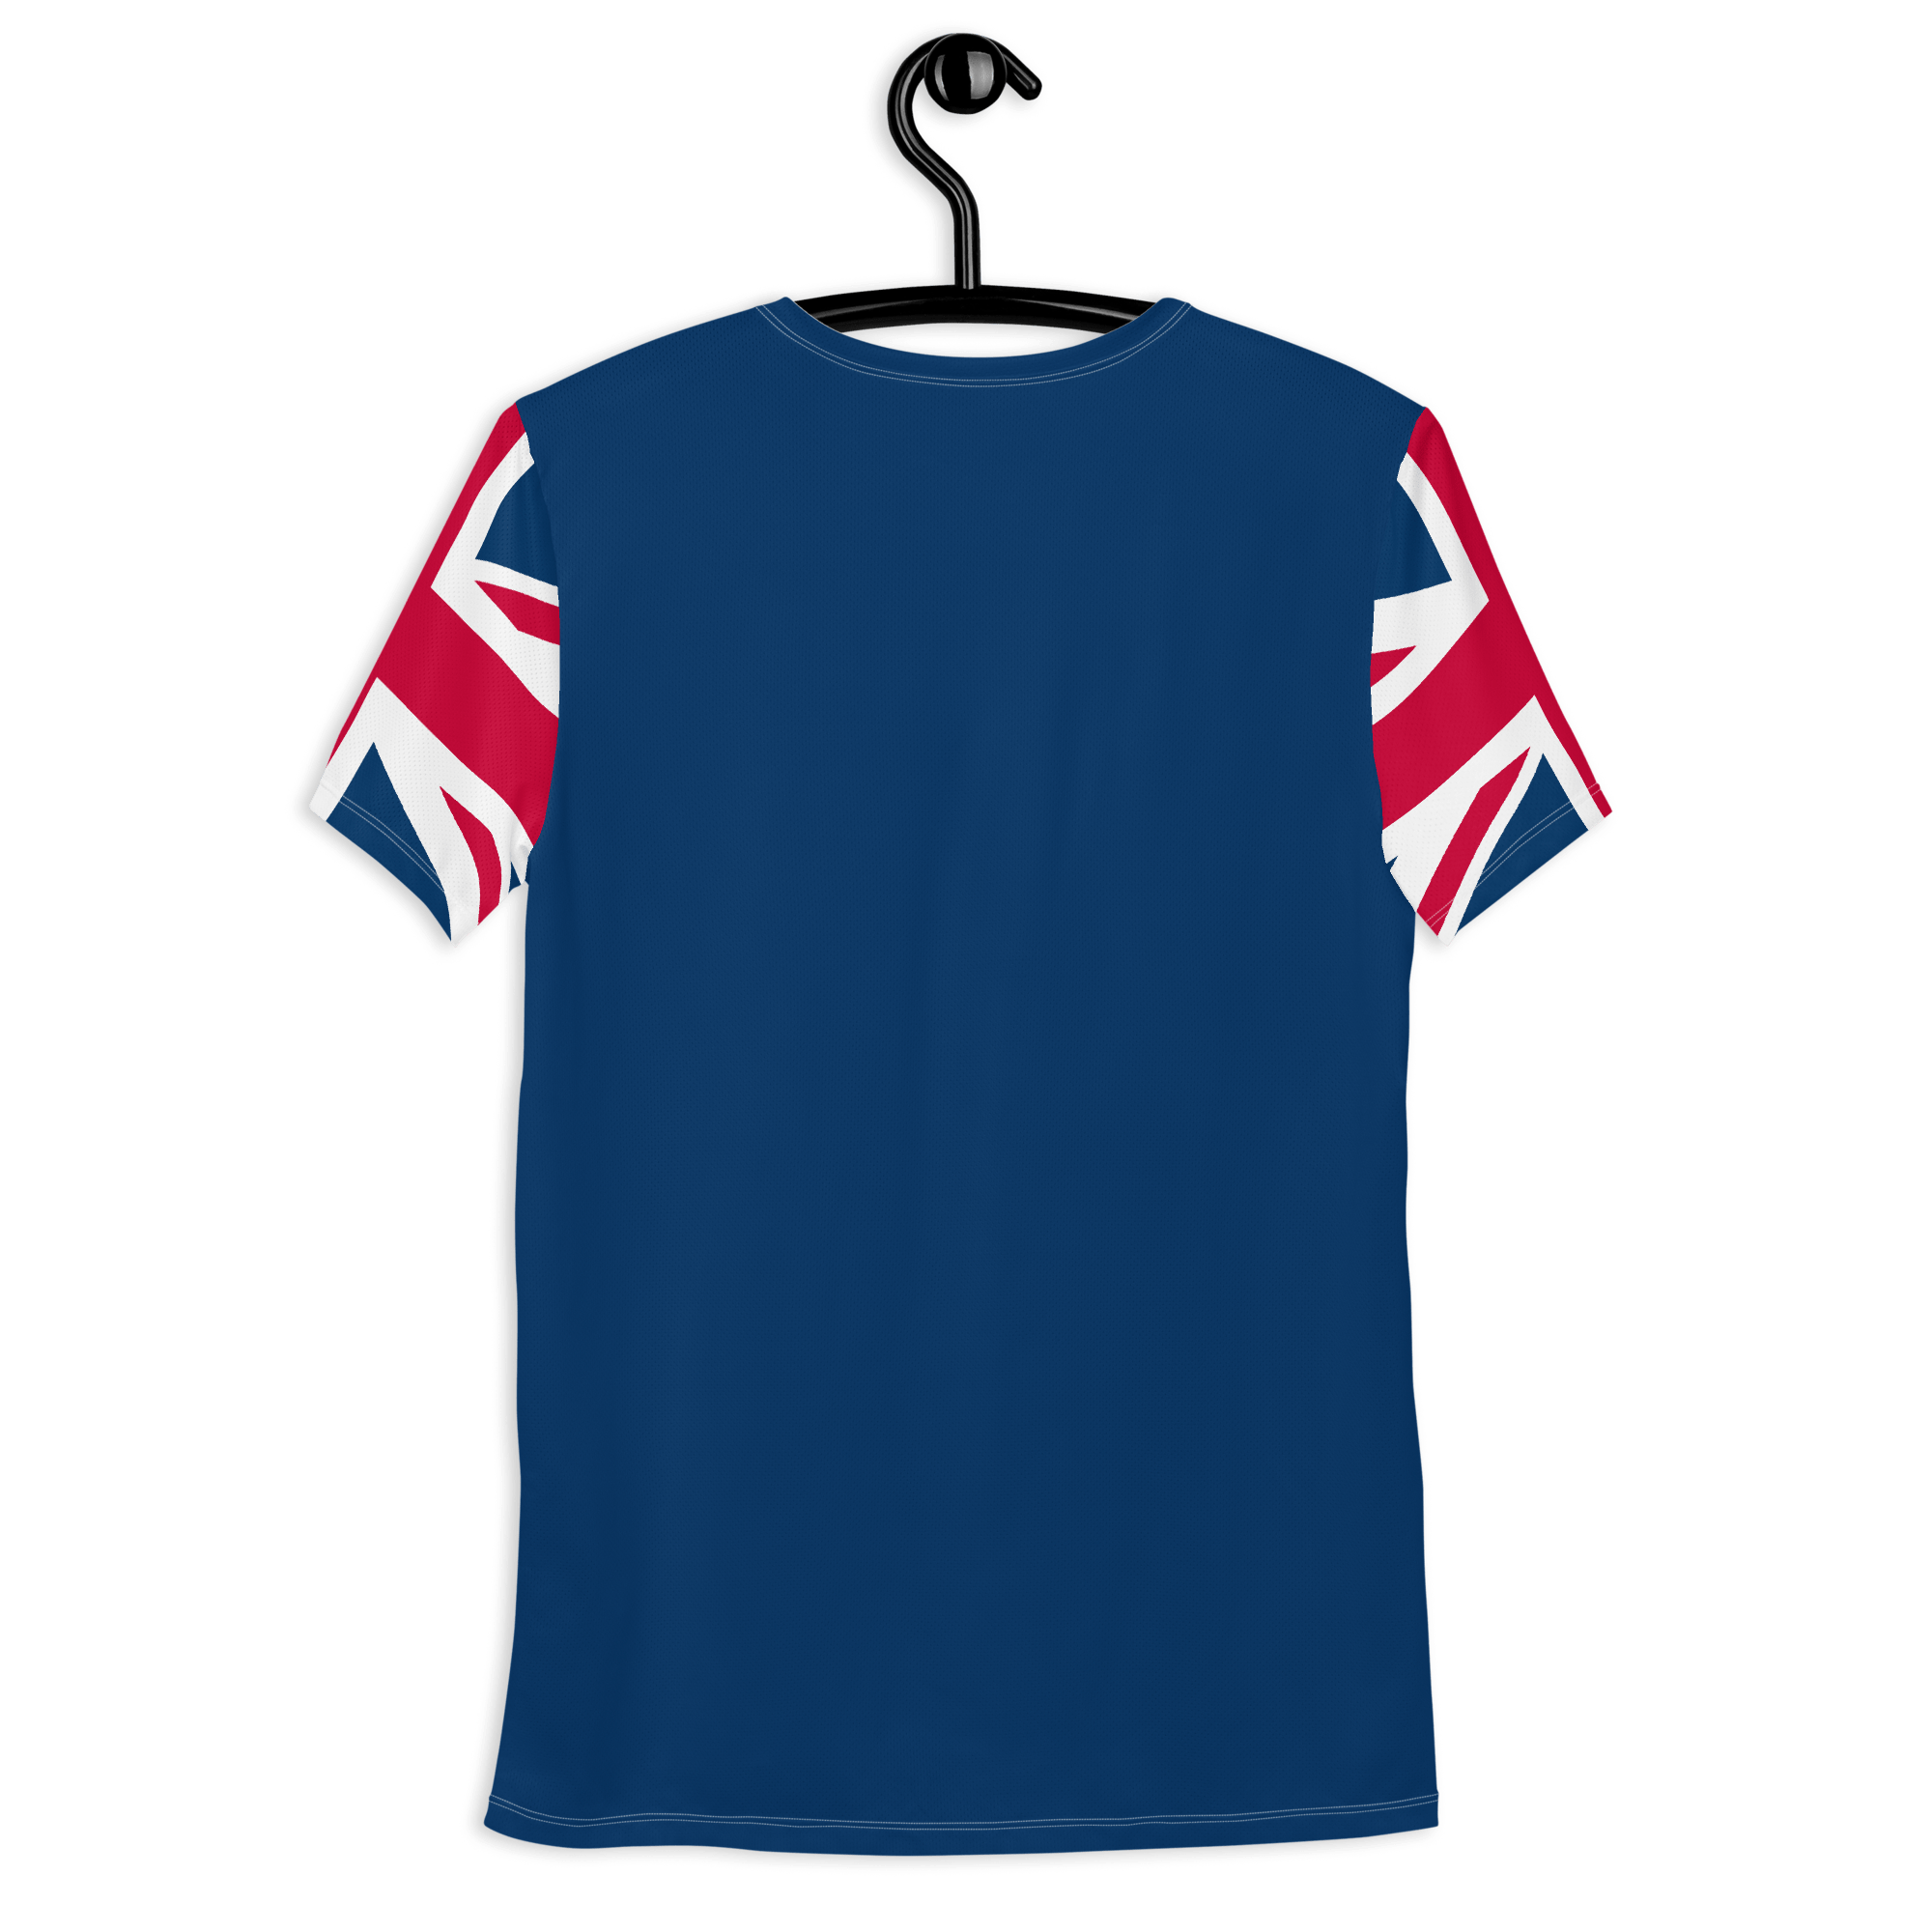 Union Jack Men's Workout Shirt Activewear Jolly & Goode